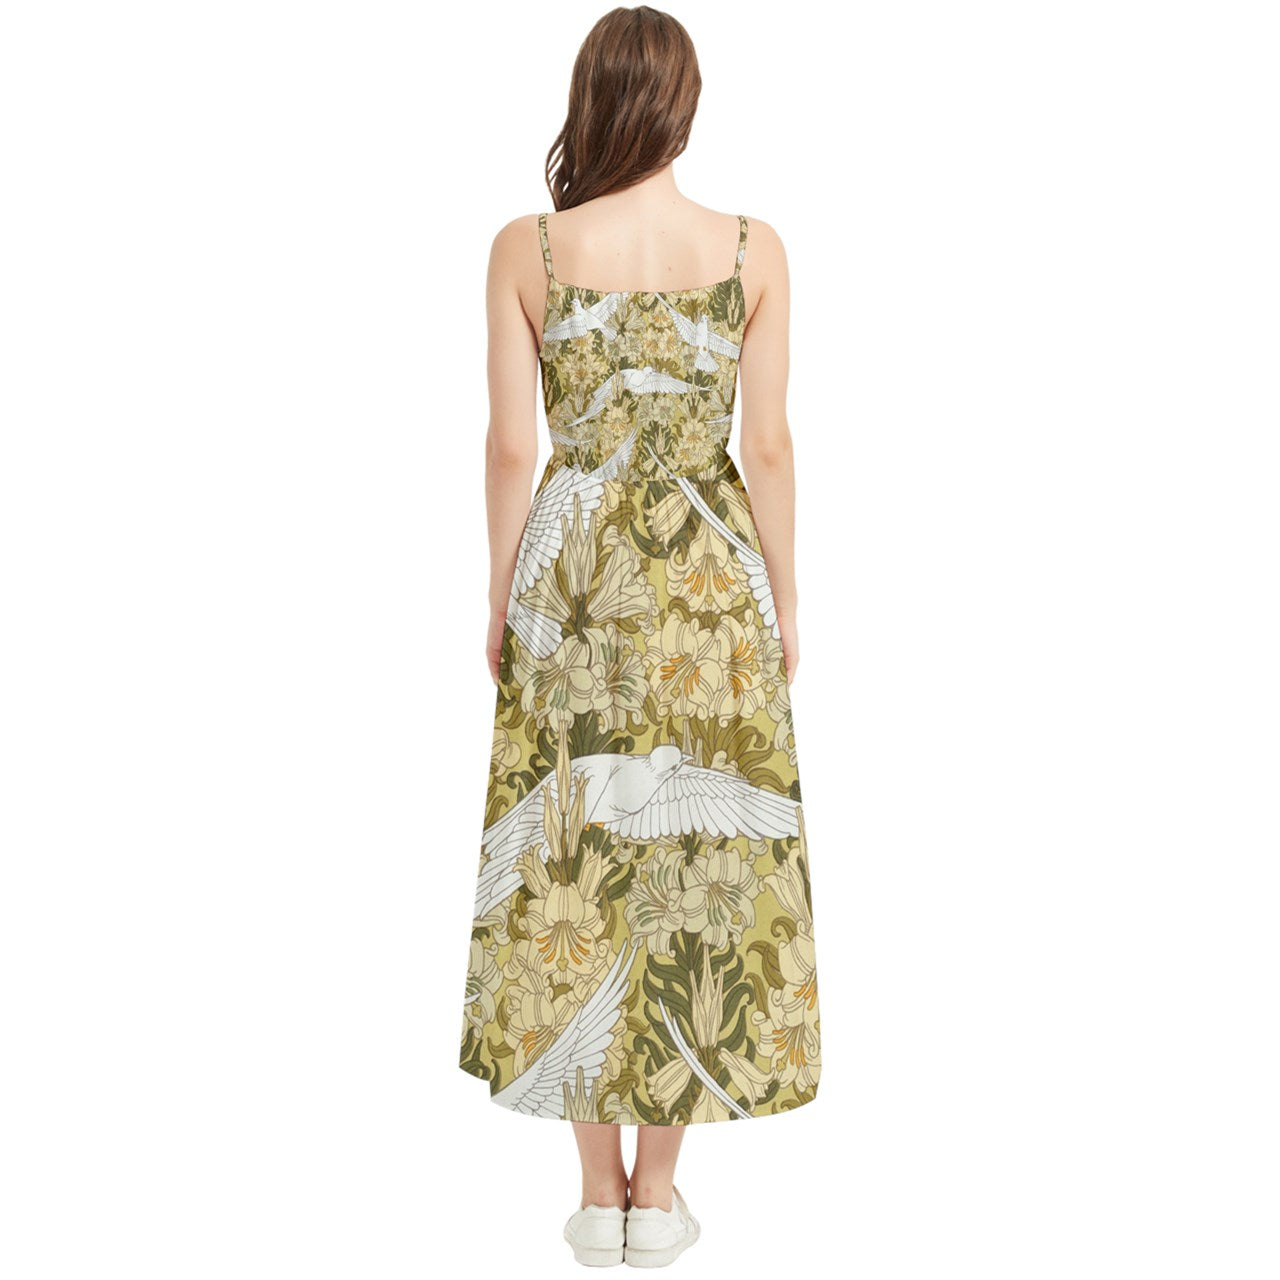 Boho Sleeveless Summer Dress, Art Nouveau Dress, Flying Doves Verneuil